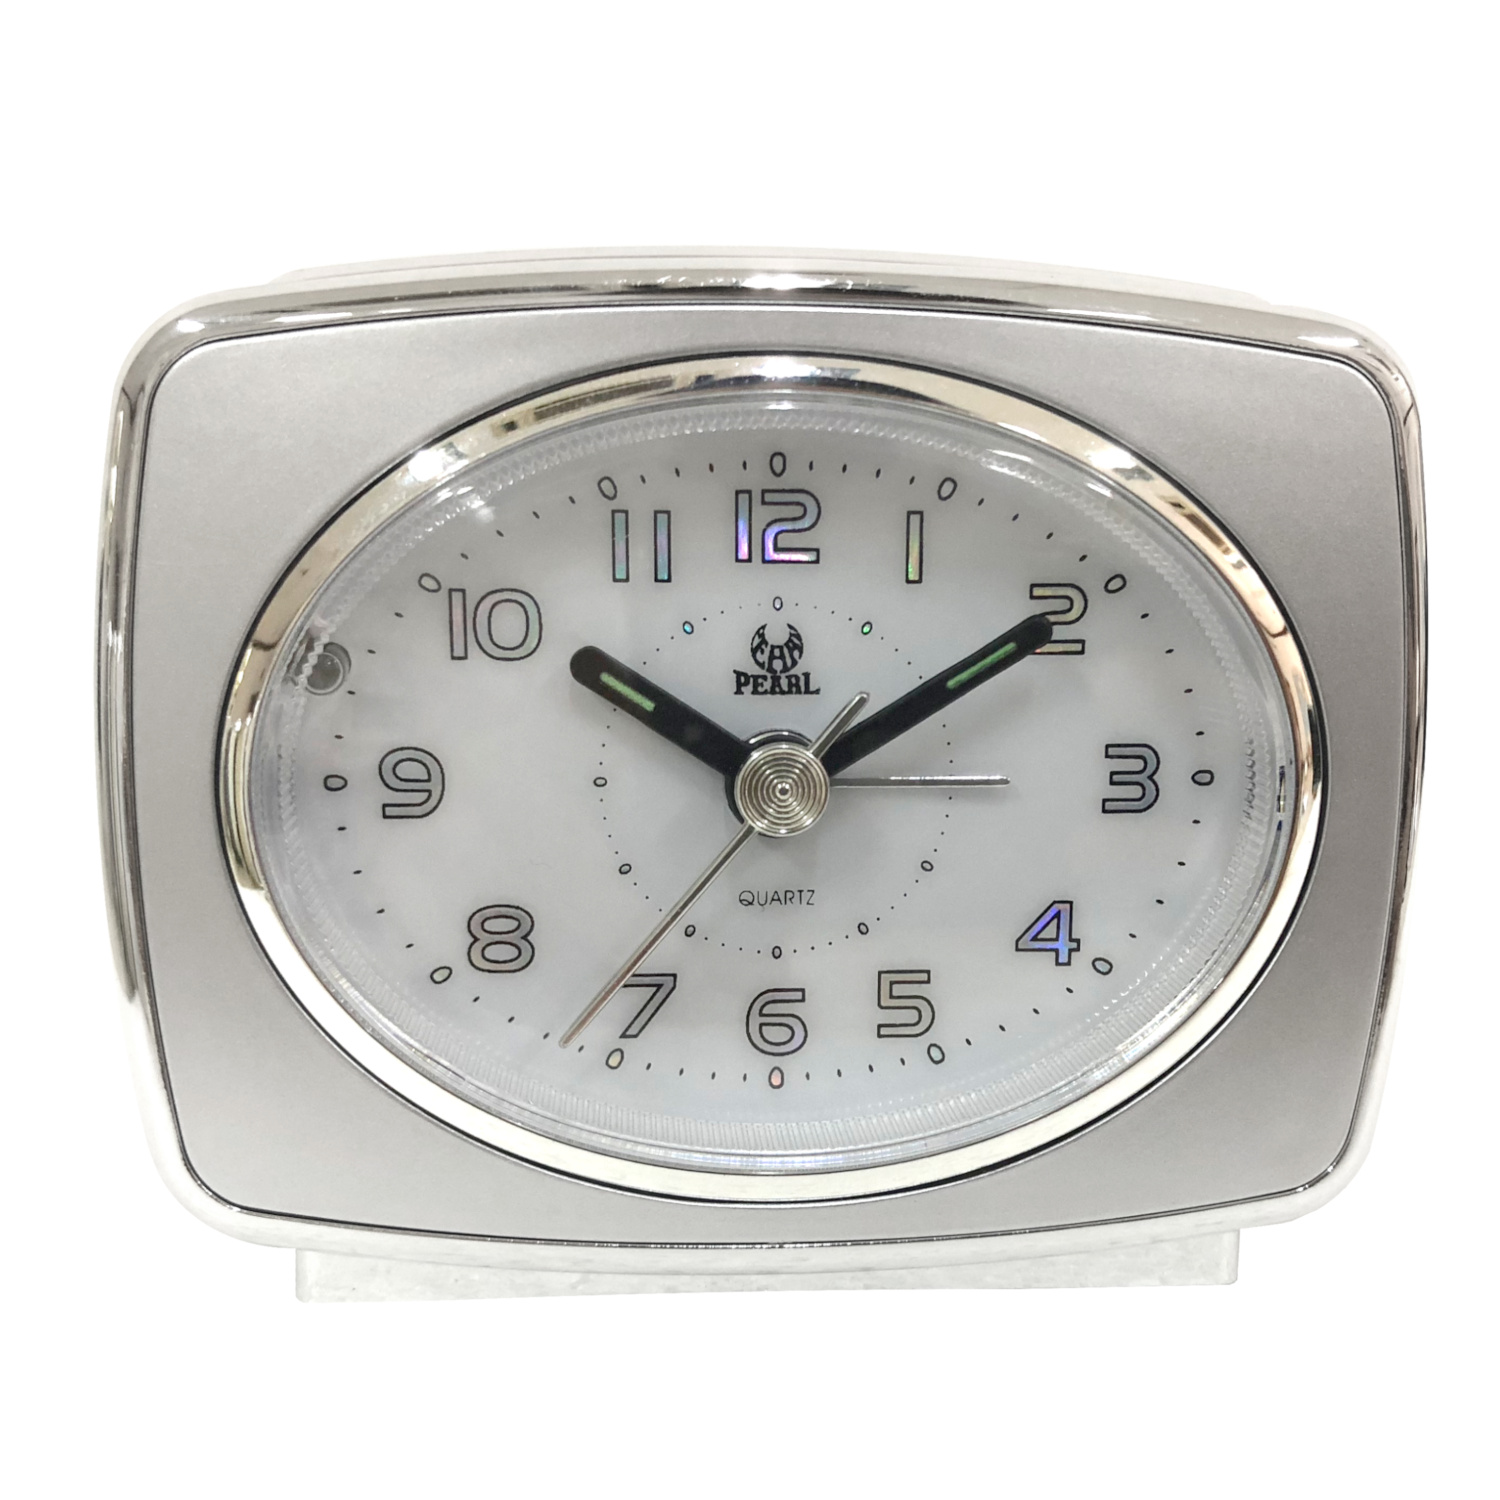 PT160-SIL Table alarm clock in silver